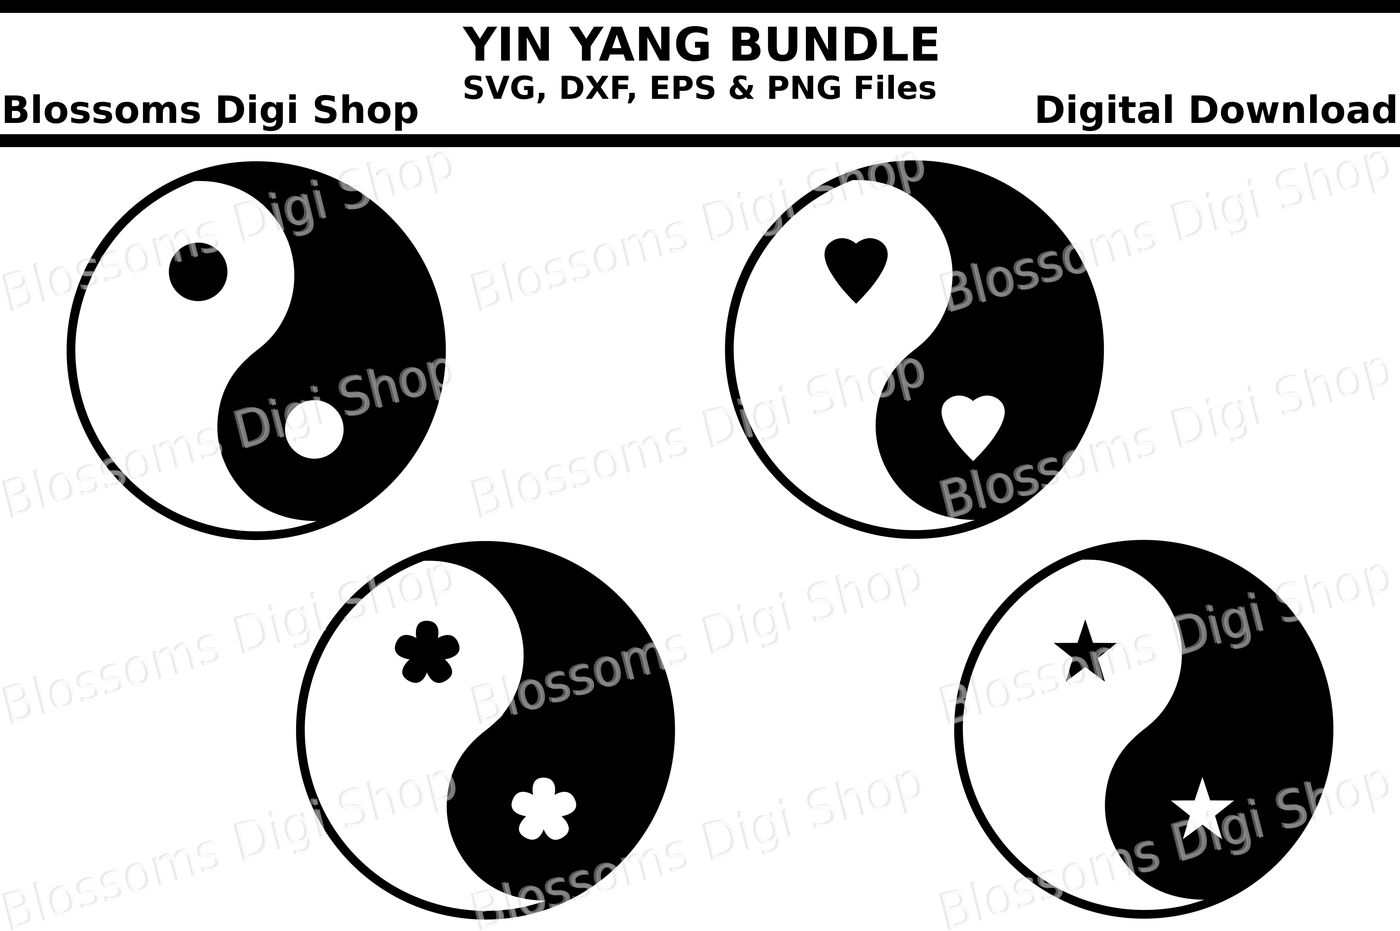 Yin Yang Bundle Cut Files Svg Dxf Eps Png Files By Blossoms Digi Shop Thehungryjpeg Com